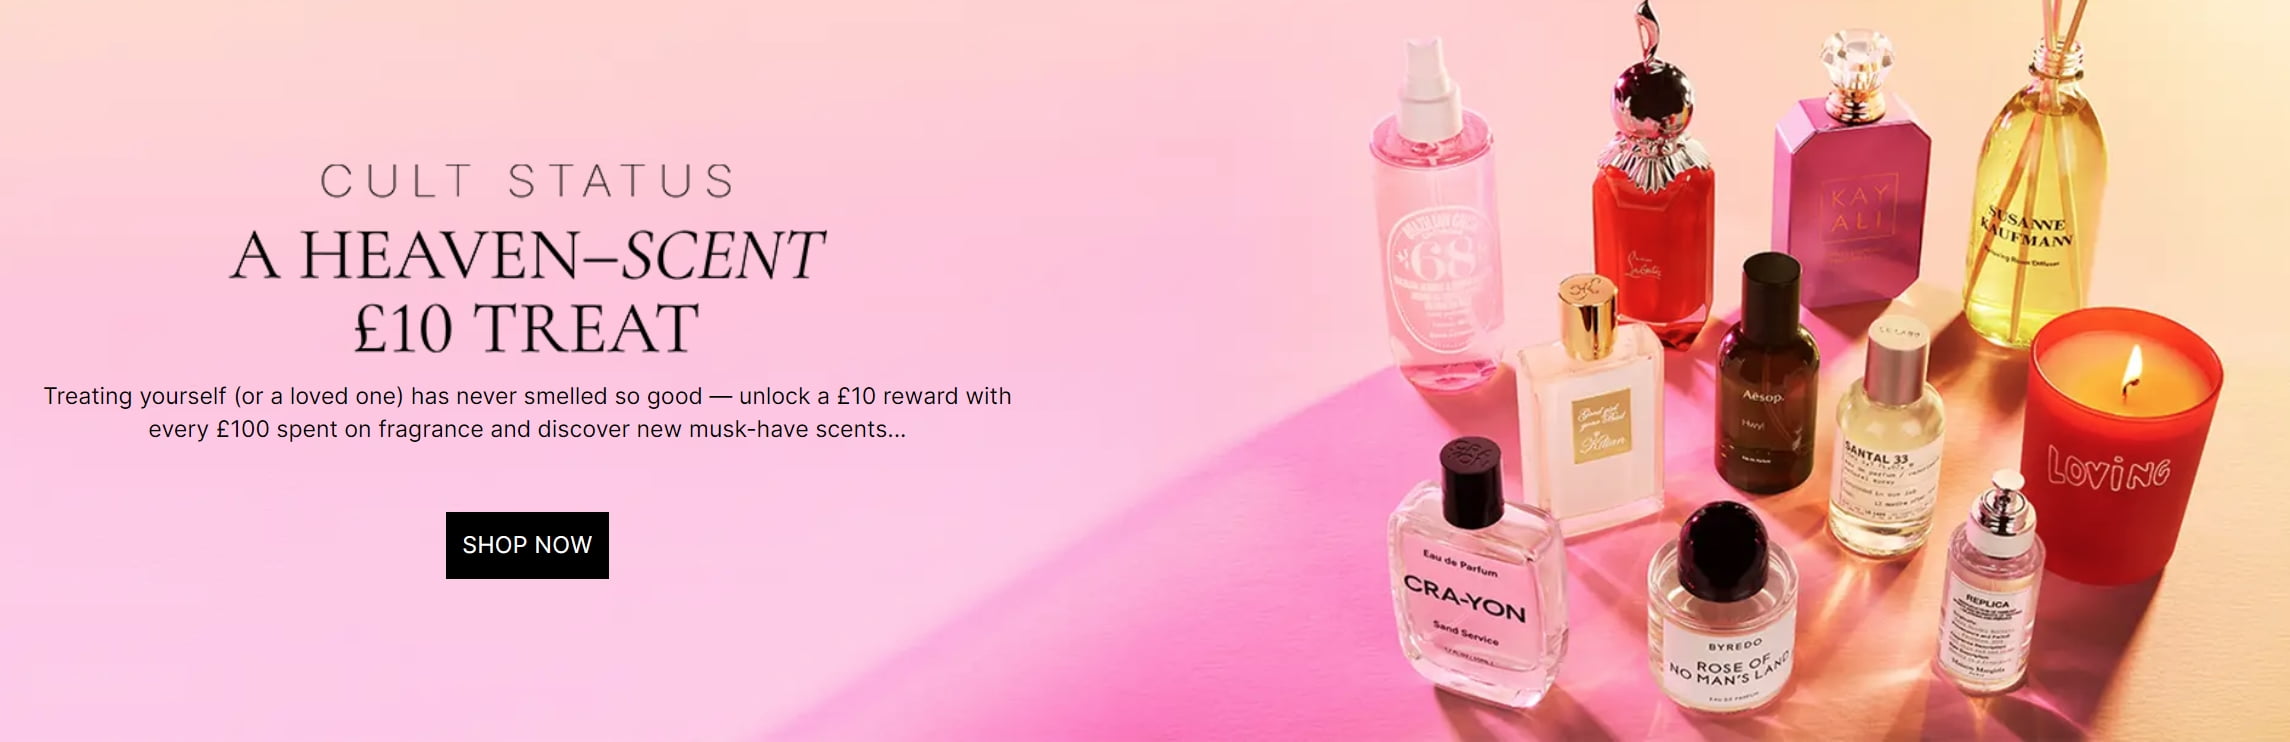 Earn £10 for every £100 spent on Fragrance